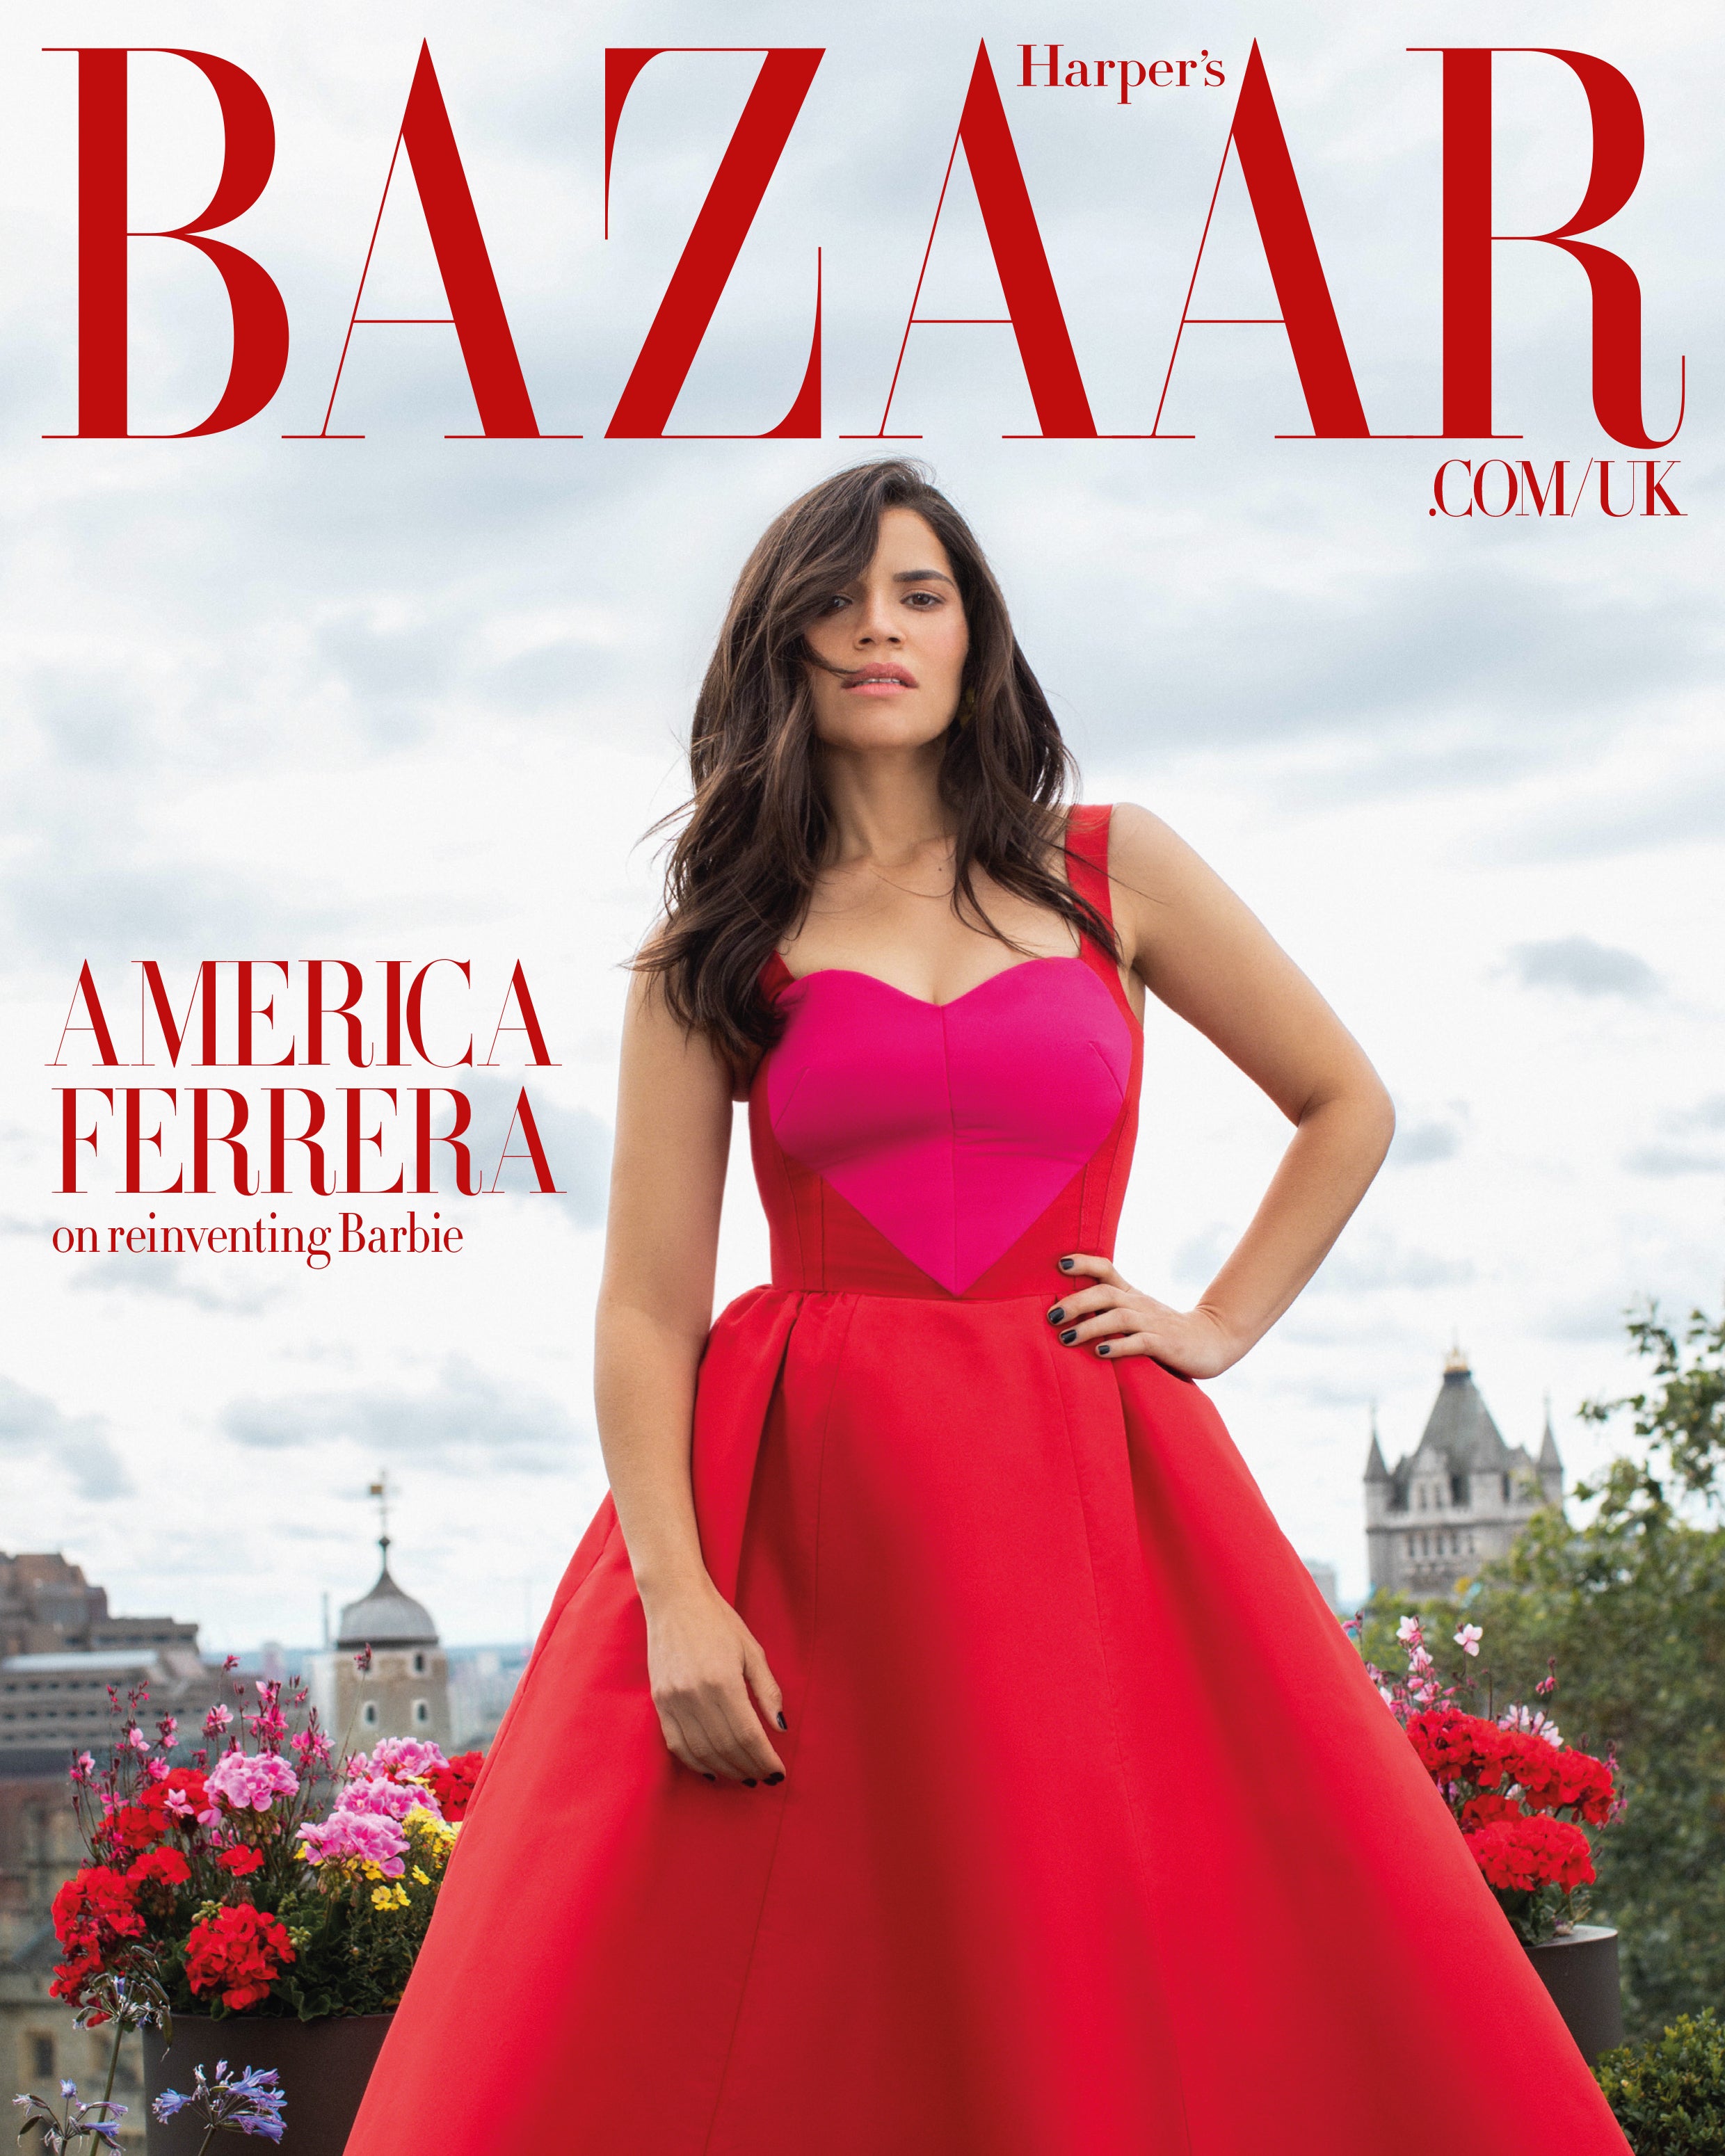 America Ferrera stars on the digital cover of Harper’s Bazaar UK